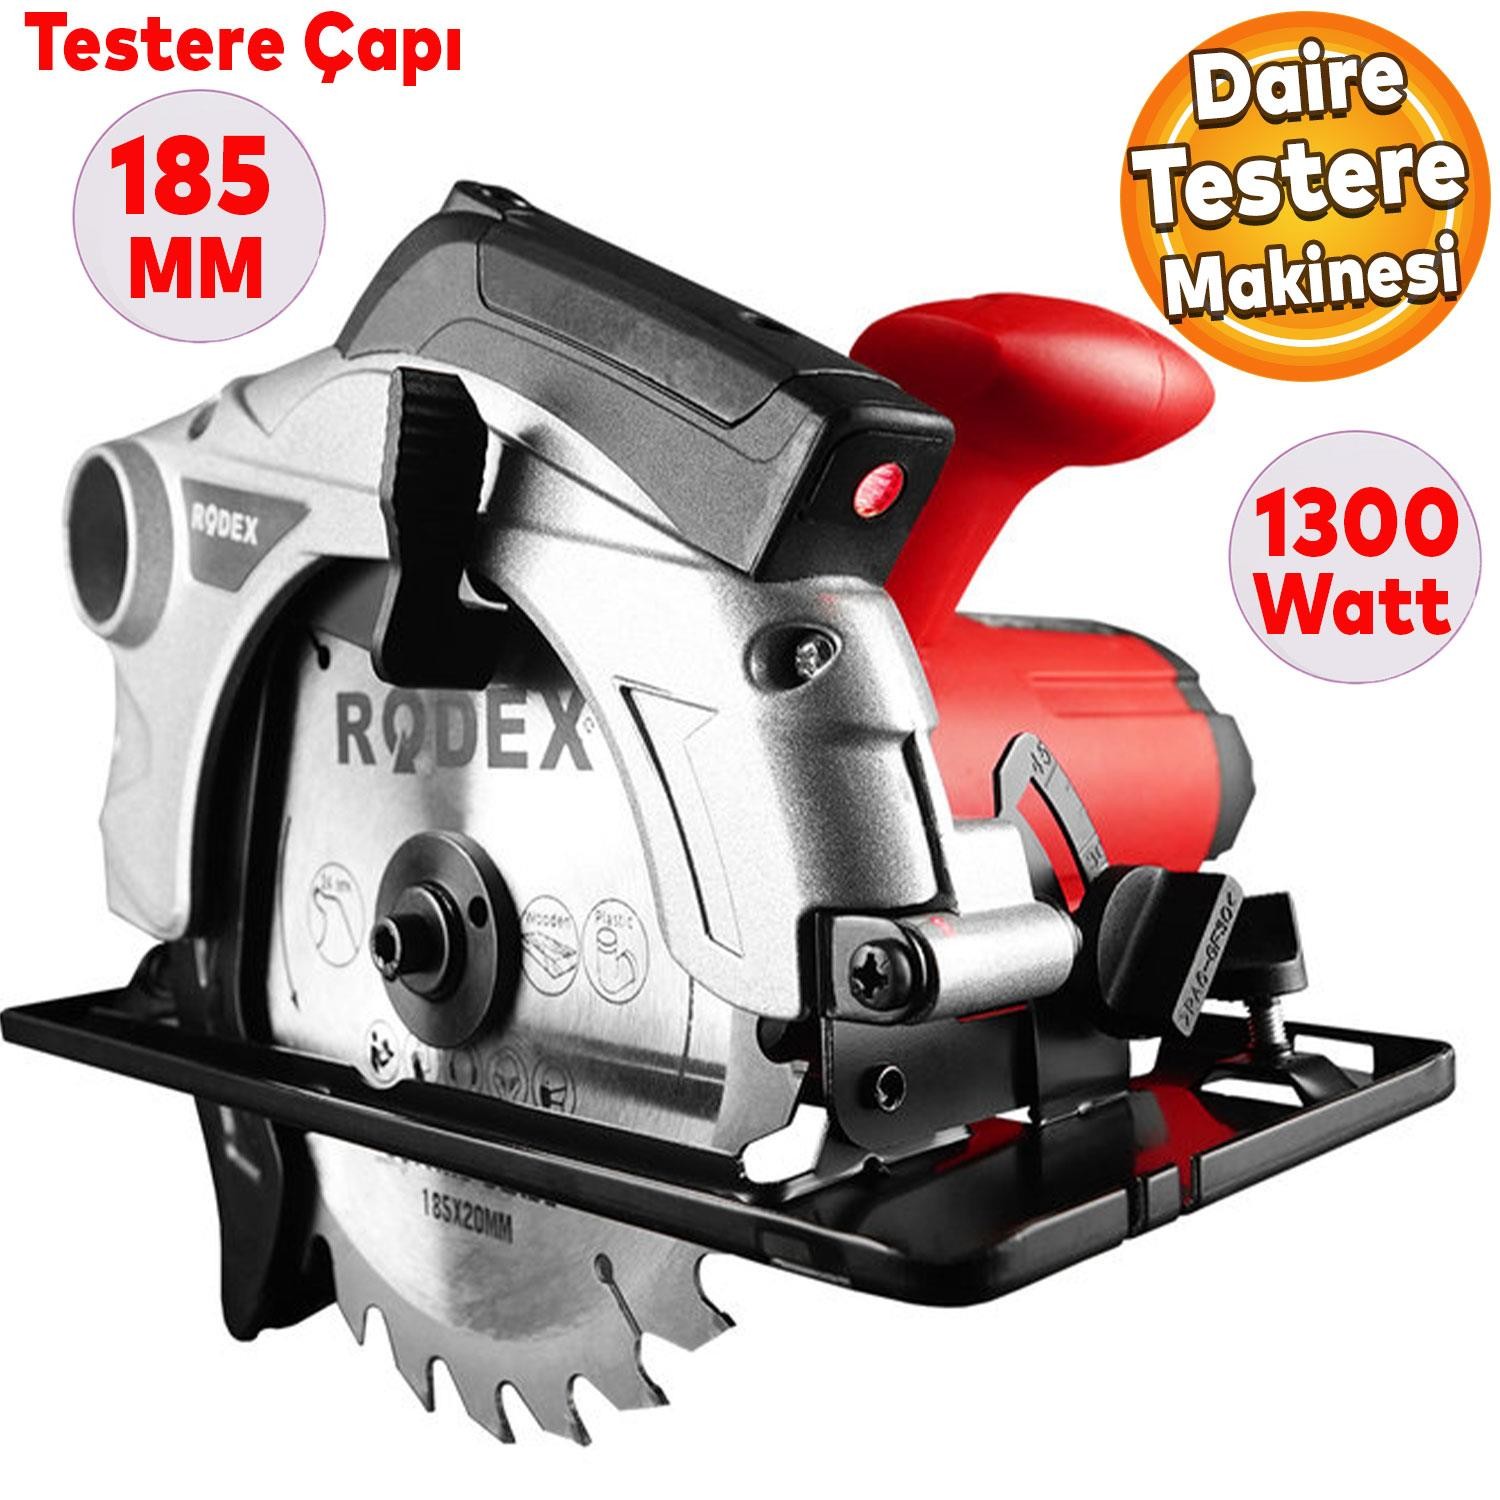 Rodex RDX3821 Daire Testere Sunta Kesme Testere Daire Testere 185 mm 1300W